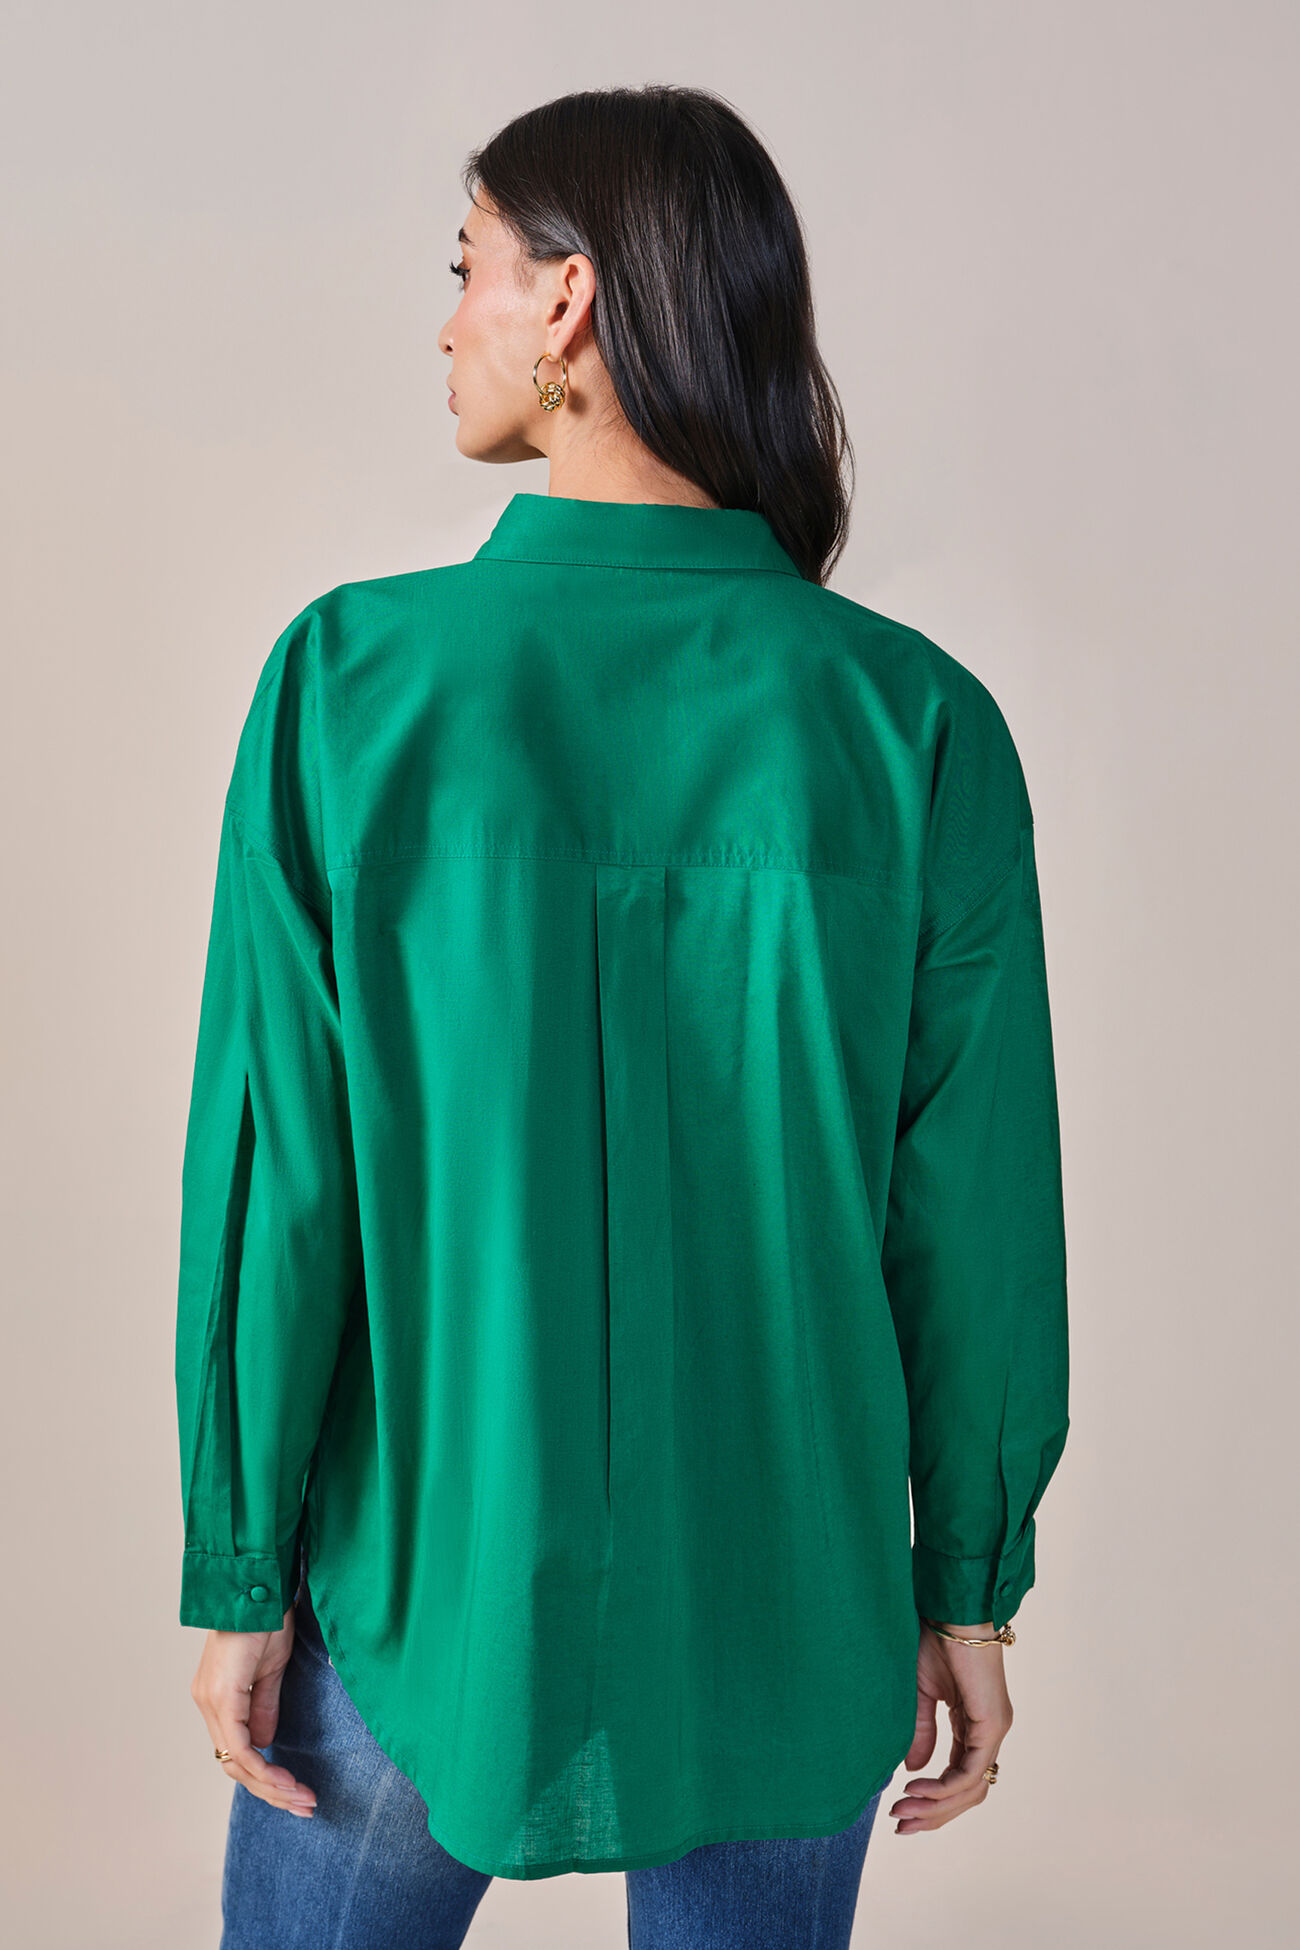 Sensational Solid Cotton Shirt, Green, image 6